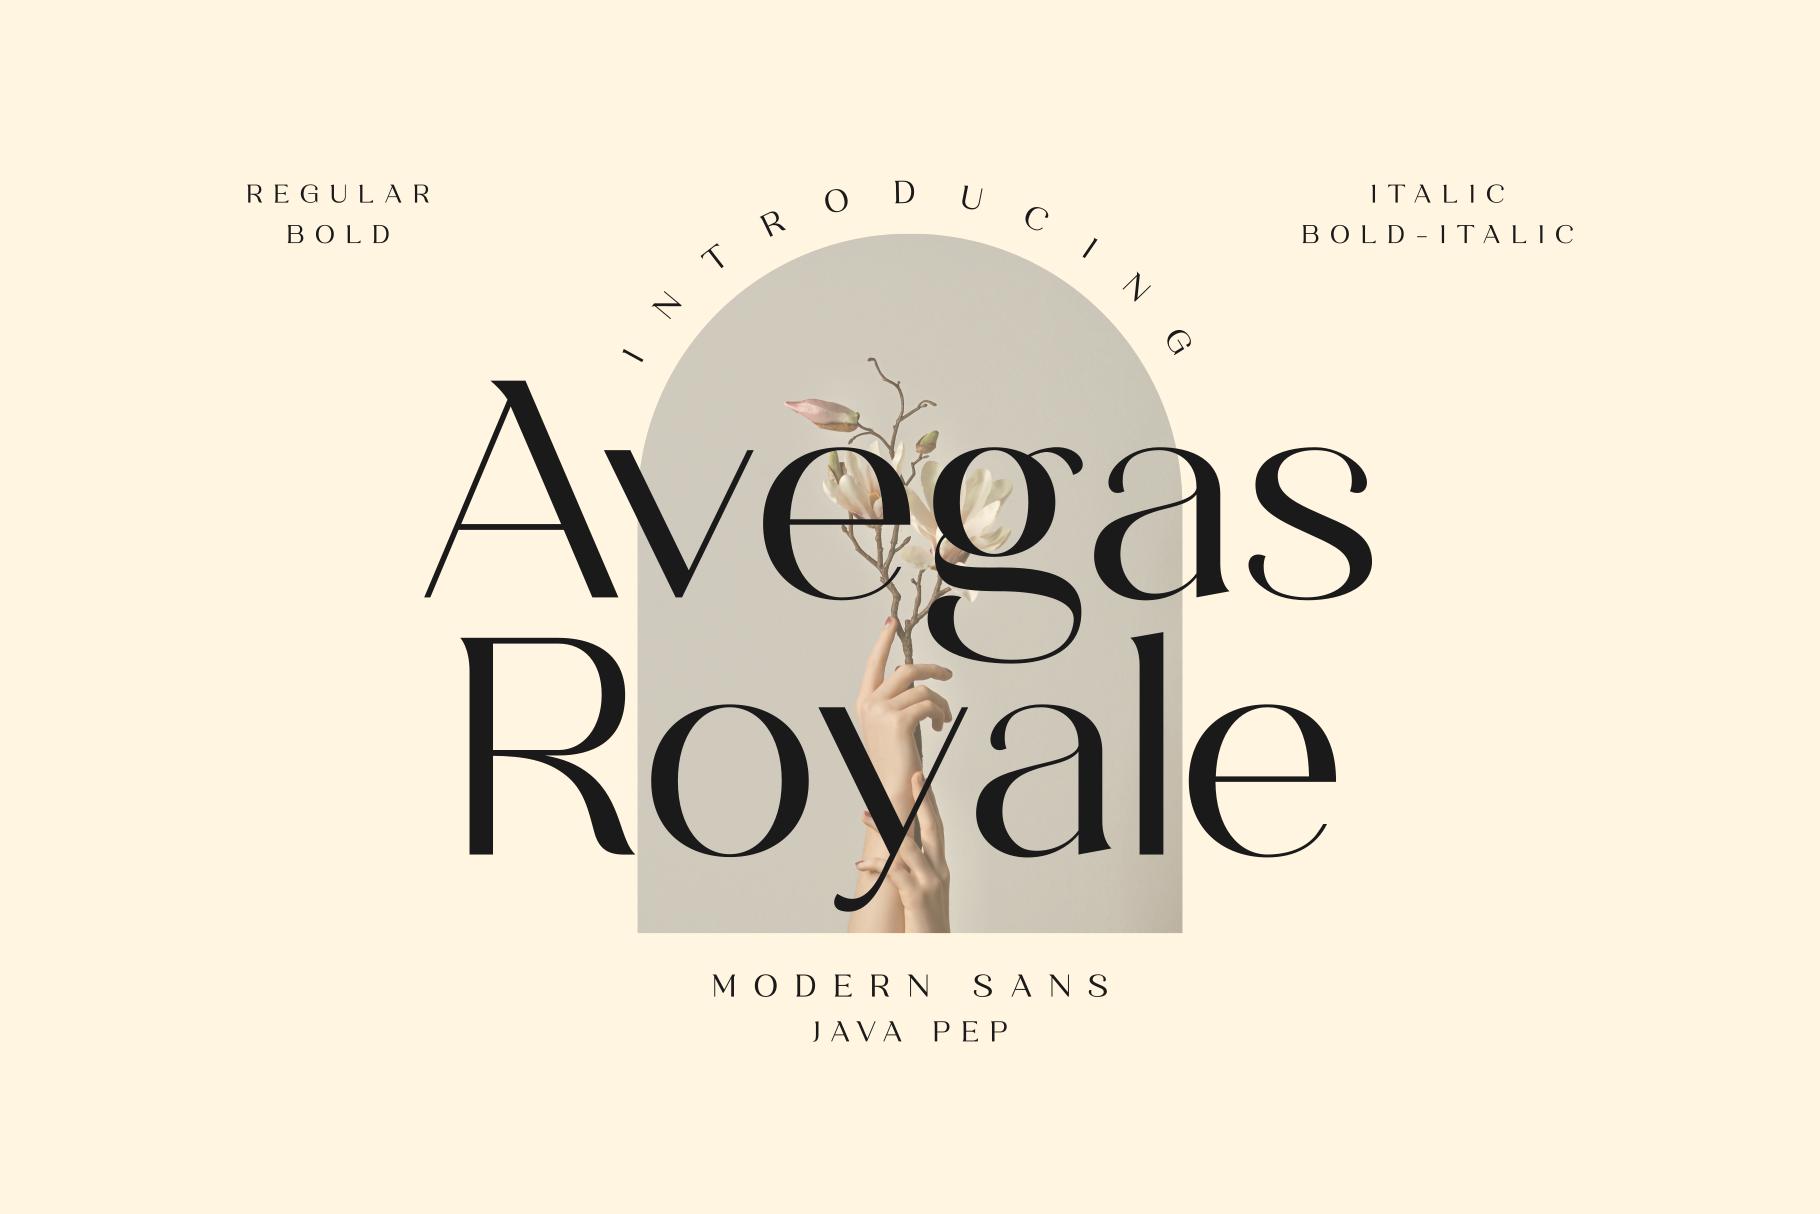 Avegas Royale Font